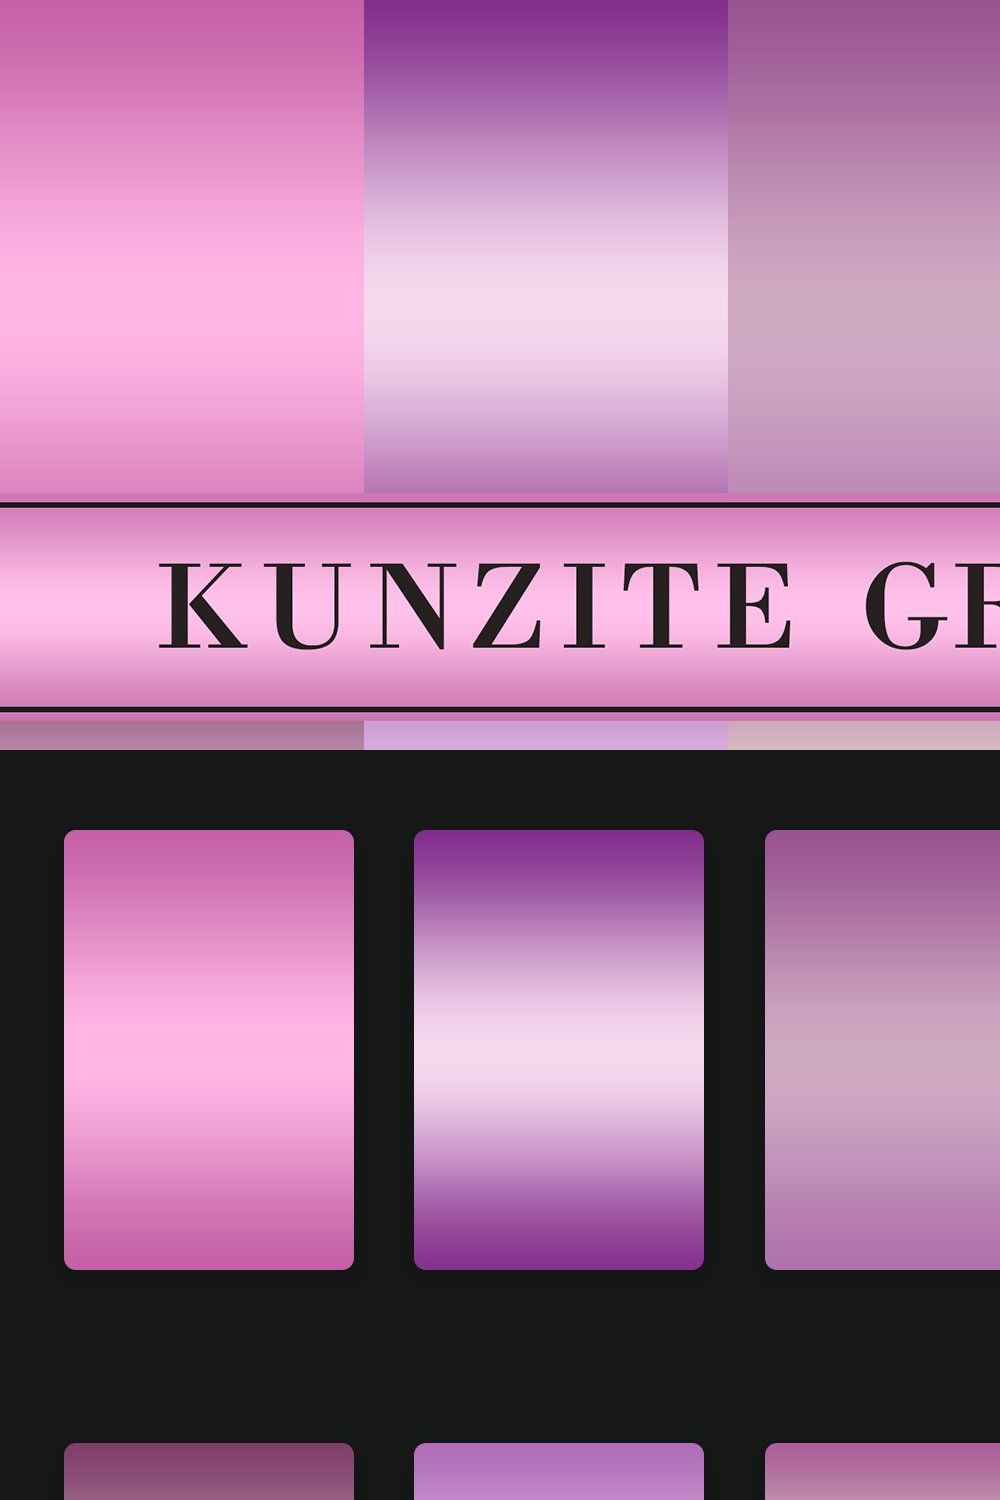 Kunzite Gradients pinterest preview image.